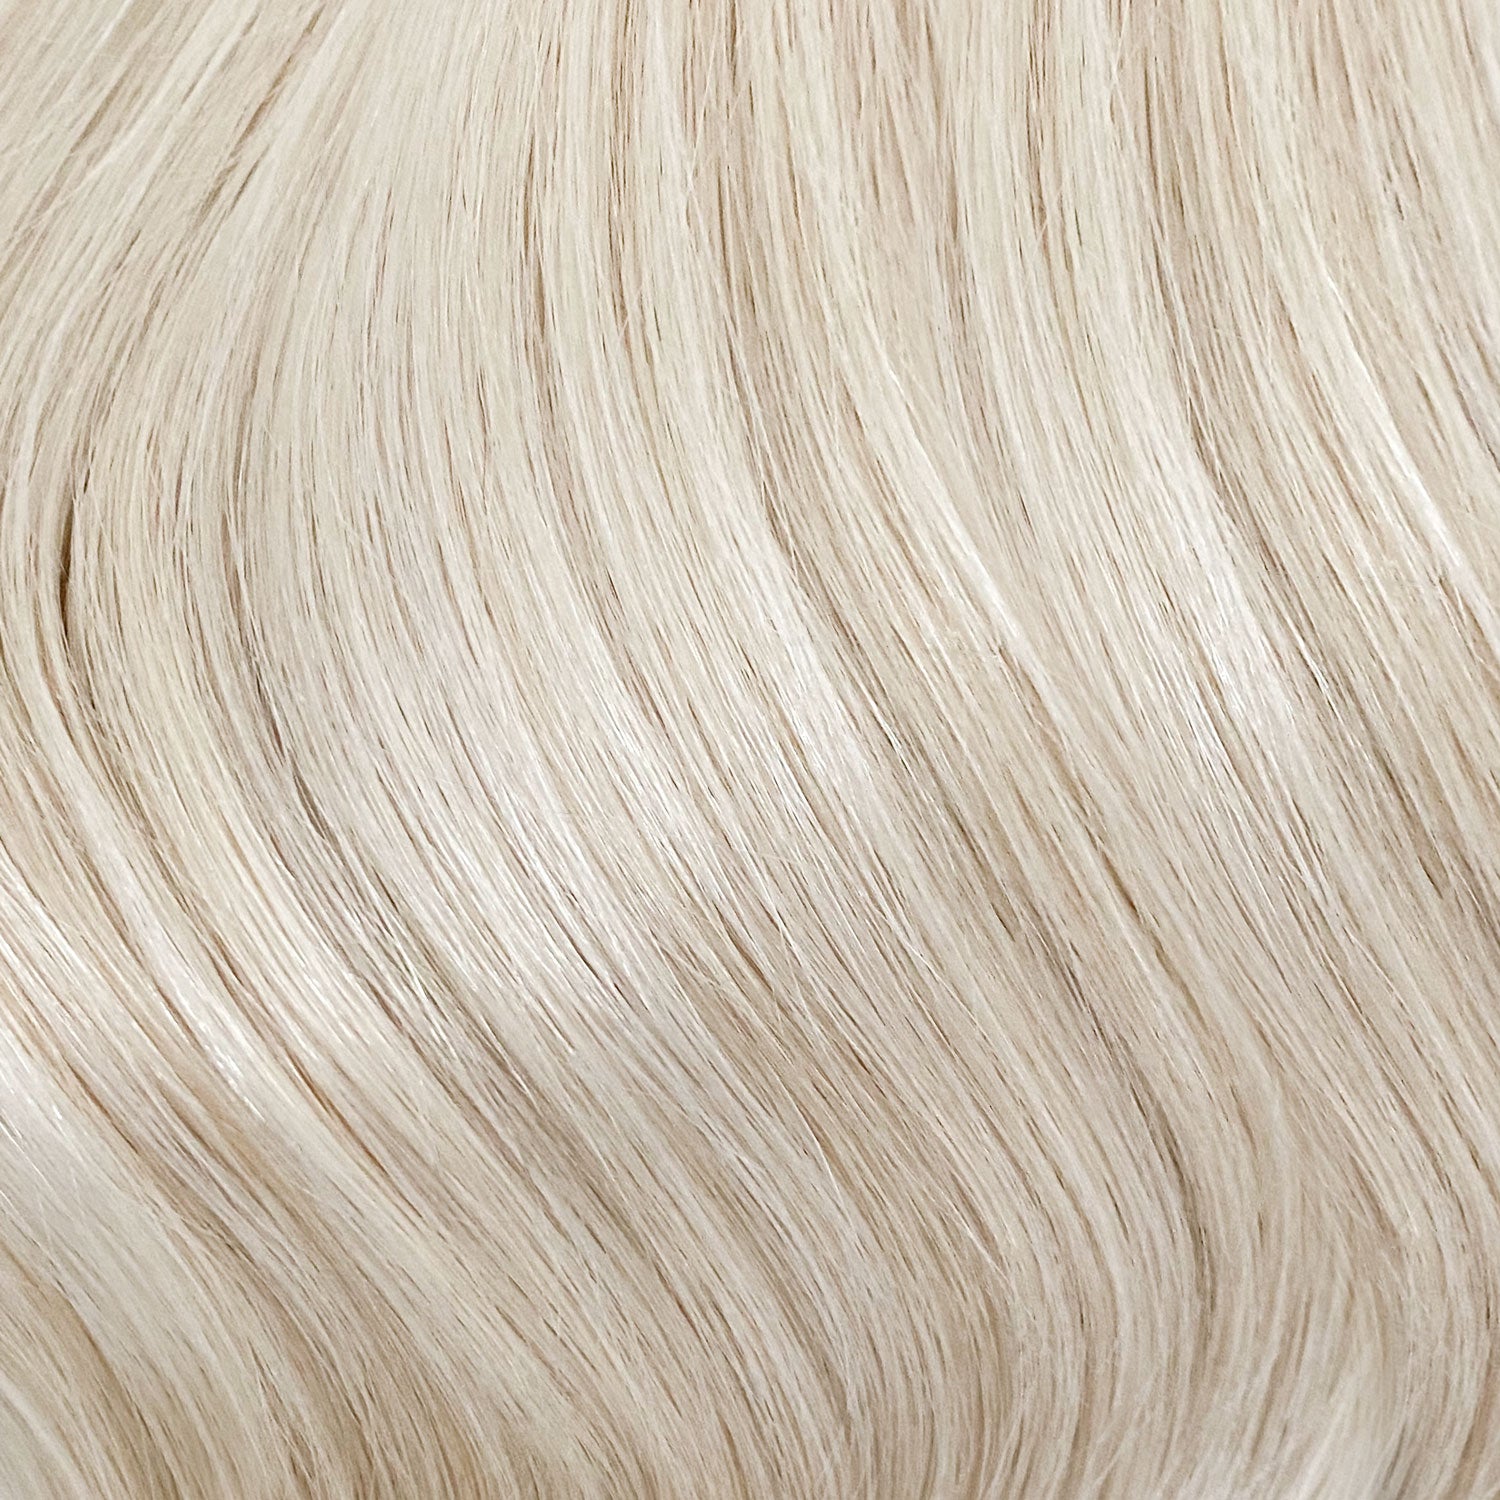 Ponytail Hair Extensions #1001 Pearl Blonde